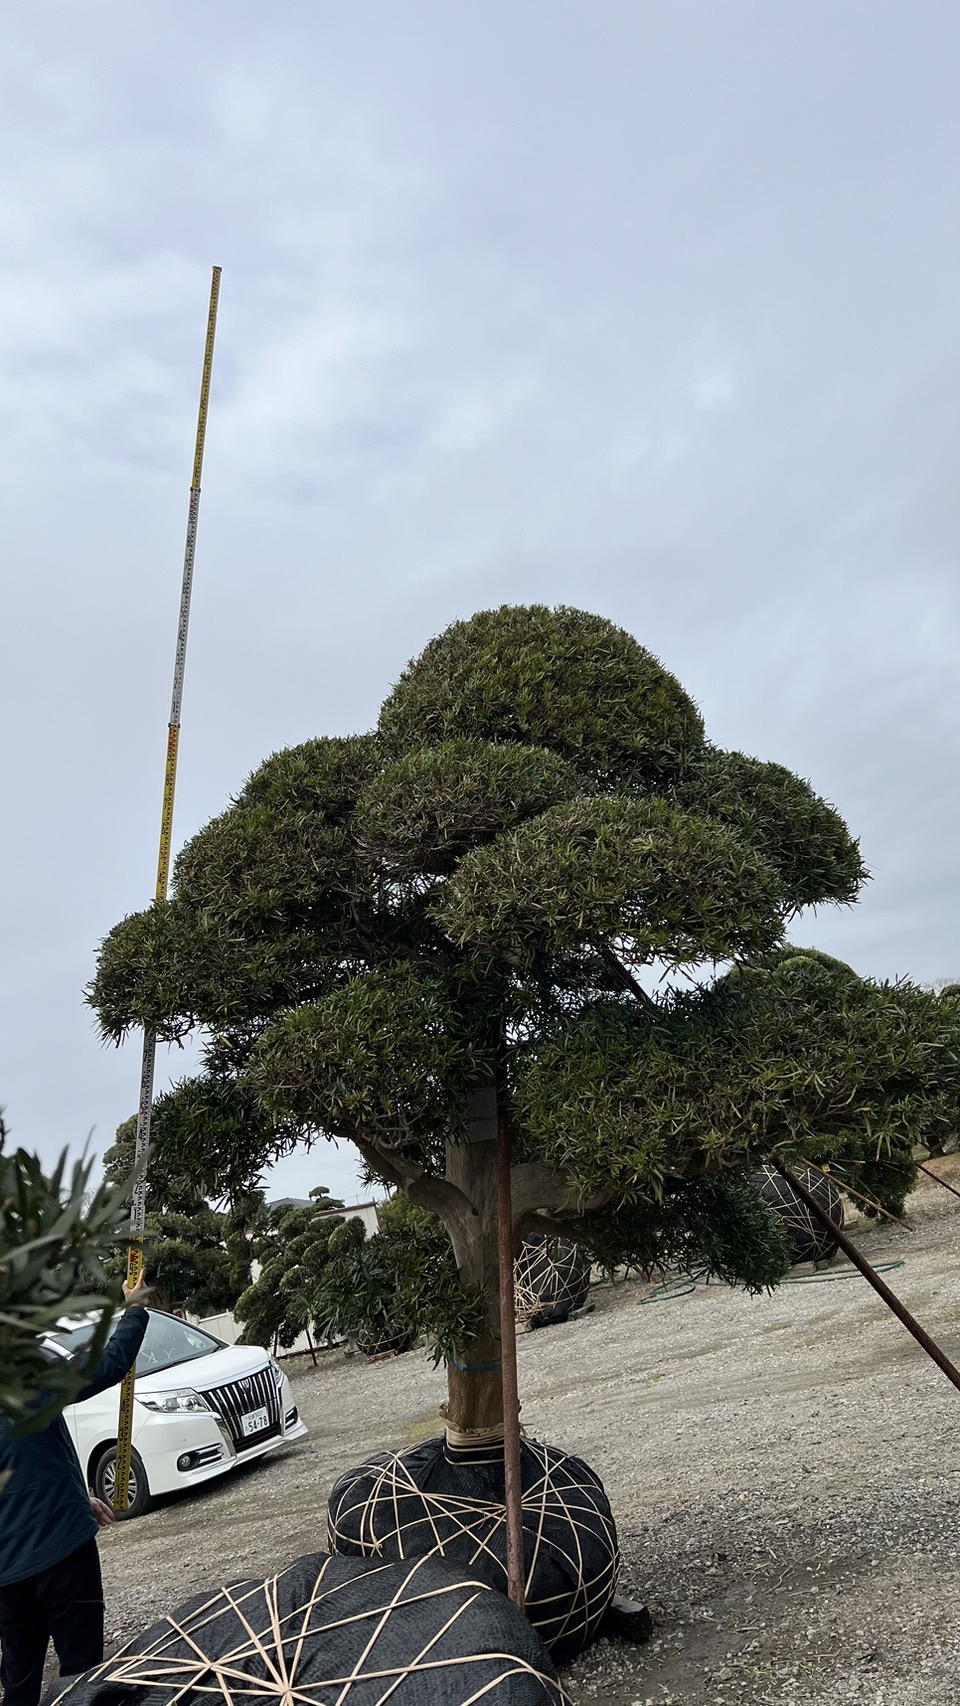 Podocarpus